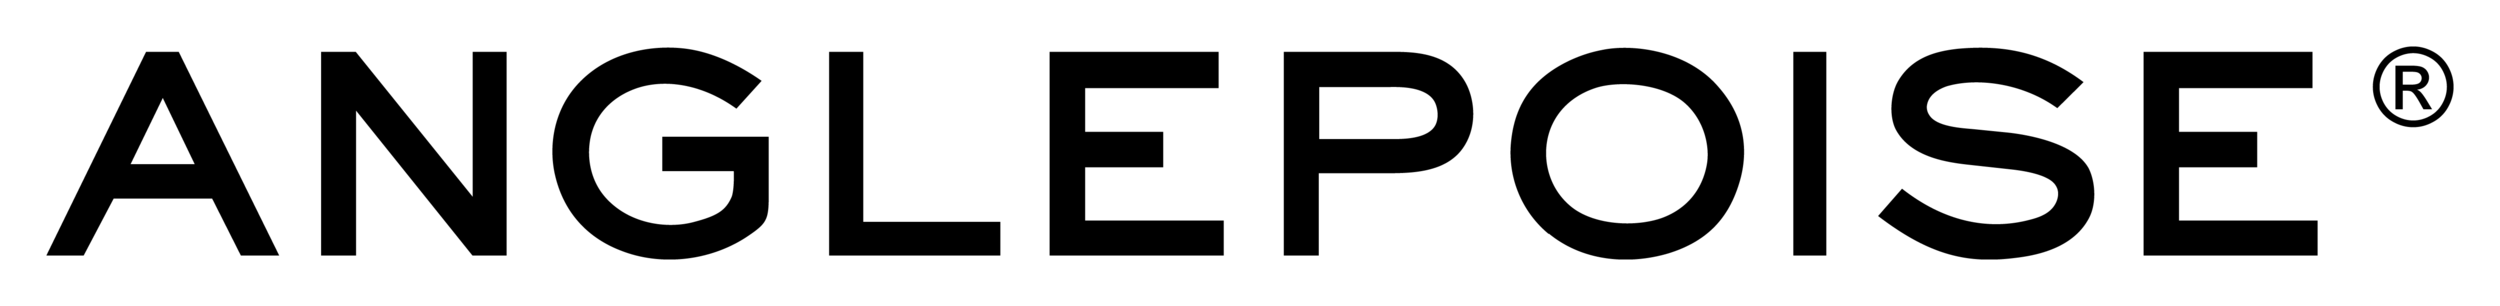 anglepoise-logo-black.png